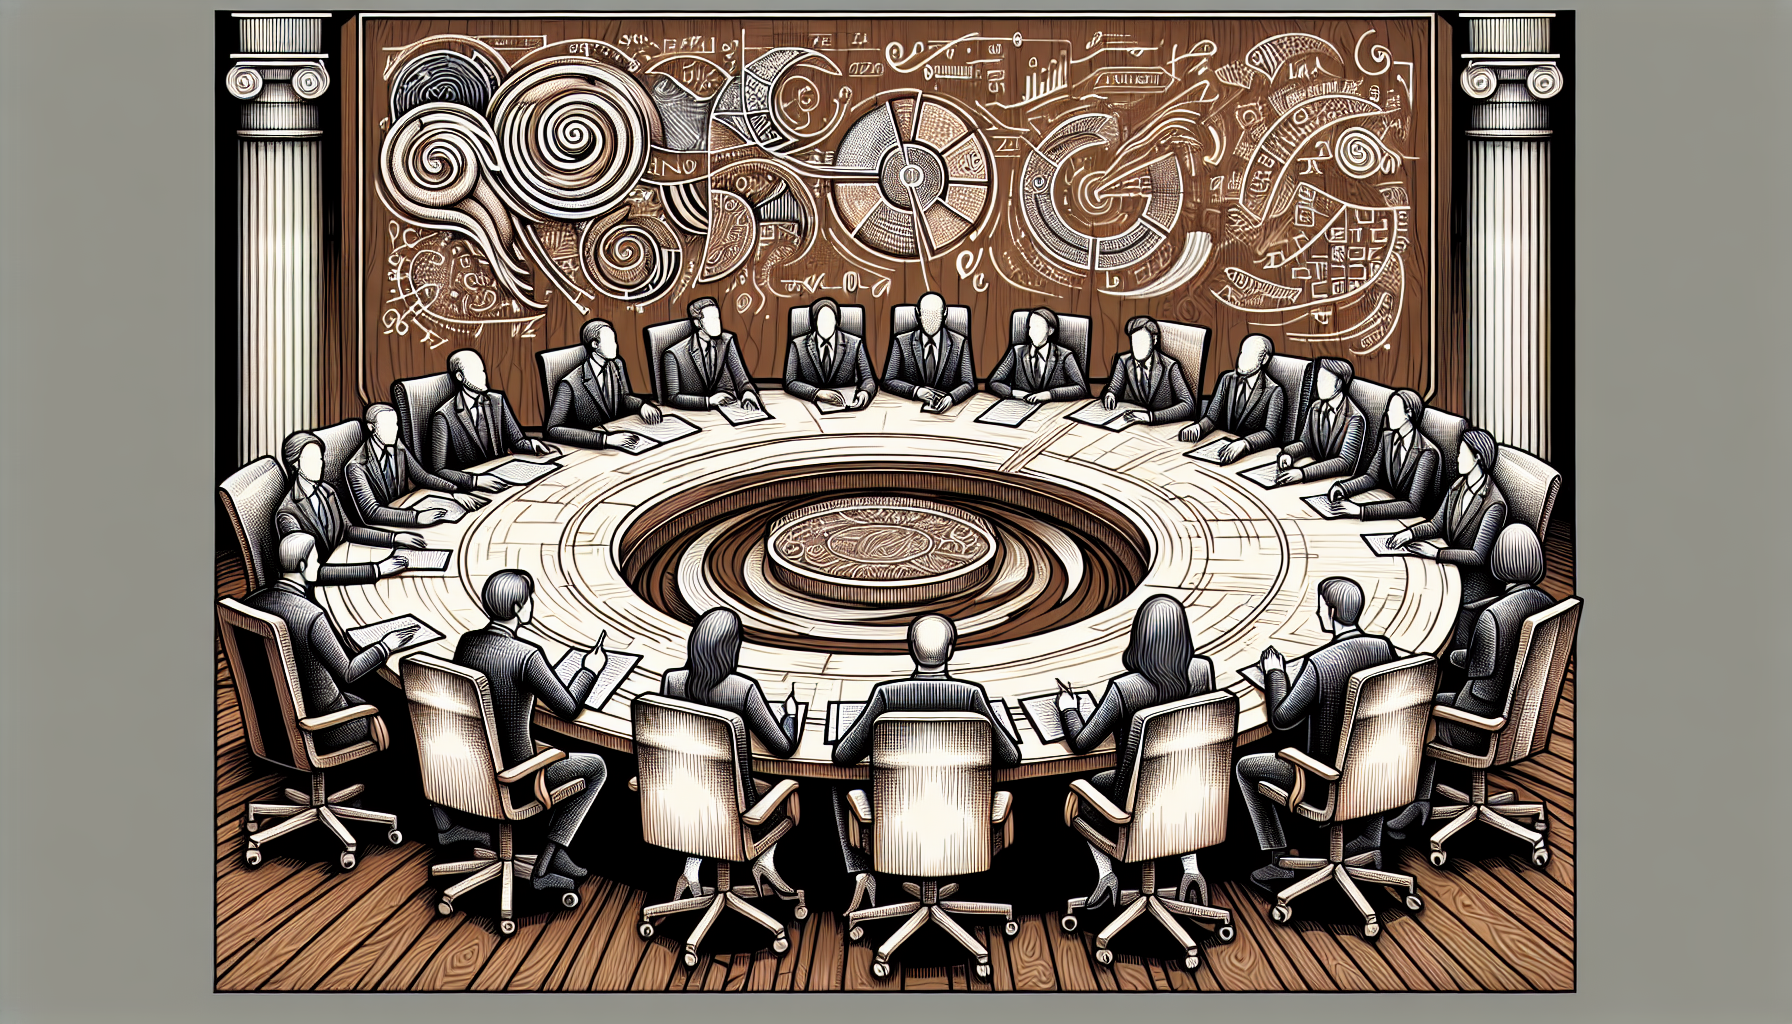 Illustration of diverse board members